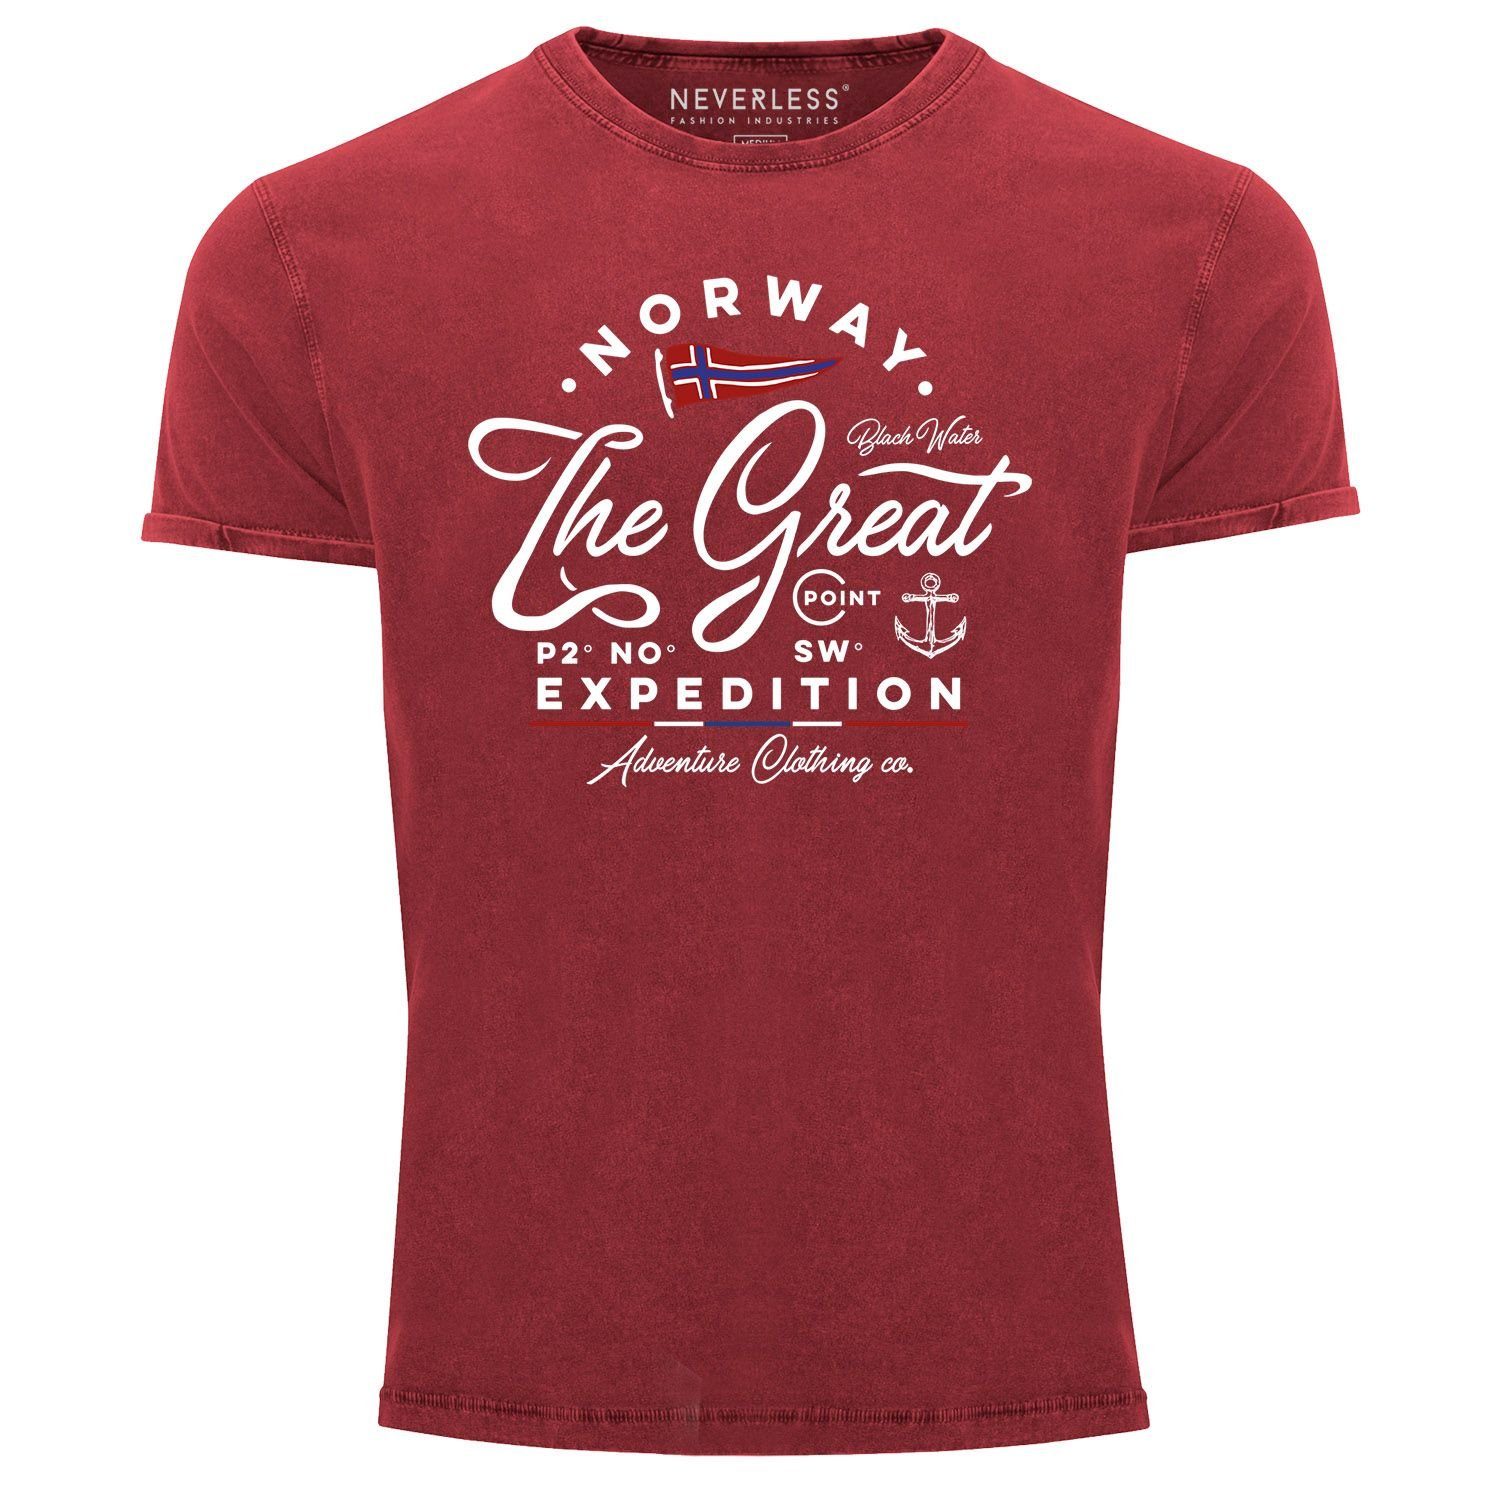 Neverless Print-Shirt Herren Vintage Aufdruck Neverless® Shirt rot Look Adventure Great Expedition T-Shirt mit Printshirt Norwegen Outdoor Used The Print